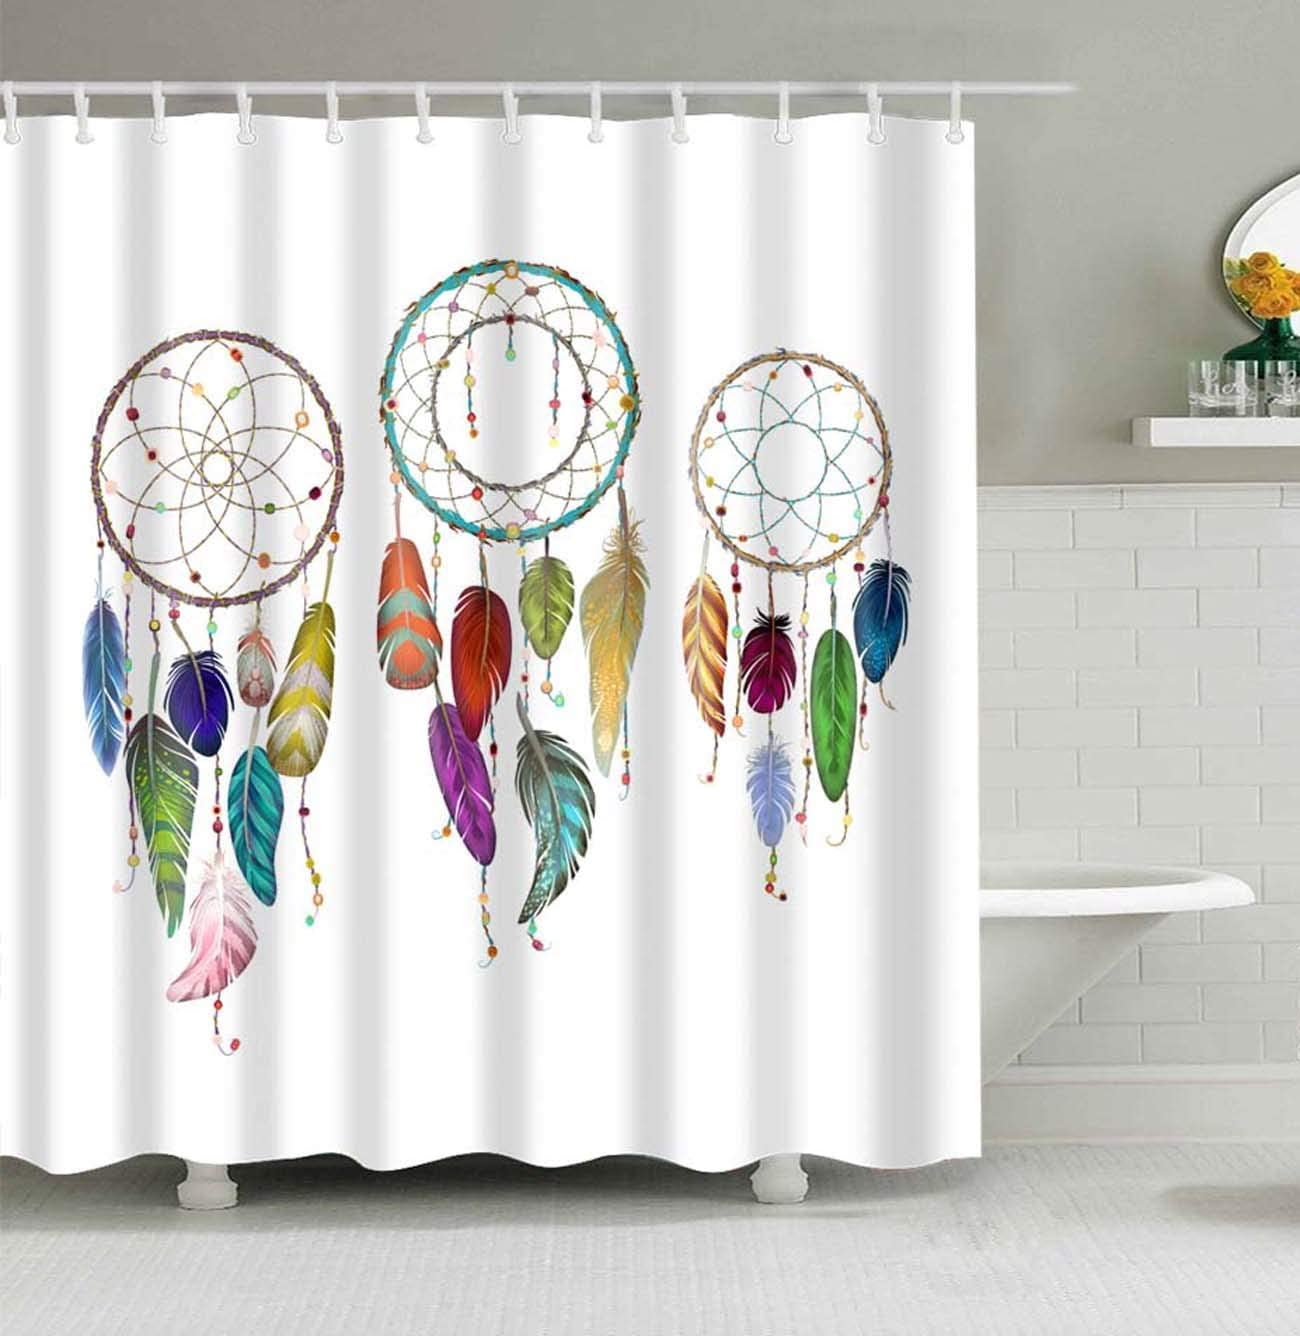 Starry Fantasy Dream Catcher Shower Curtain Bathroom Decor Fabric & 12hook 71" 